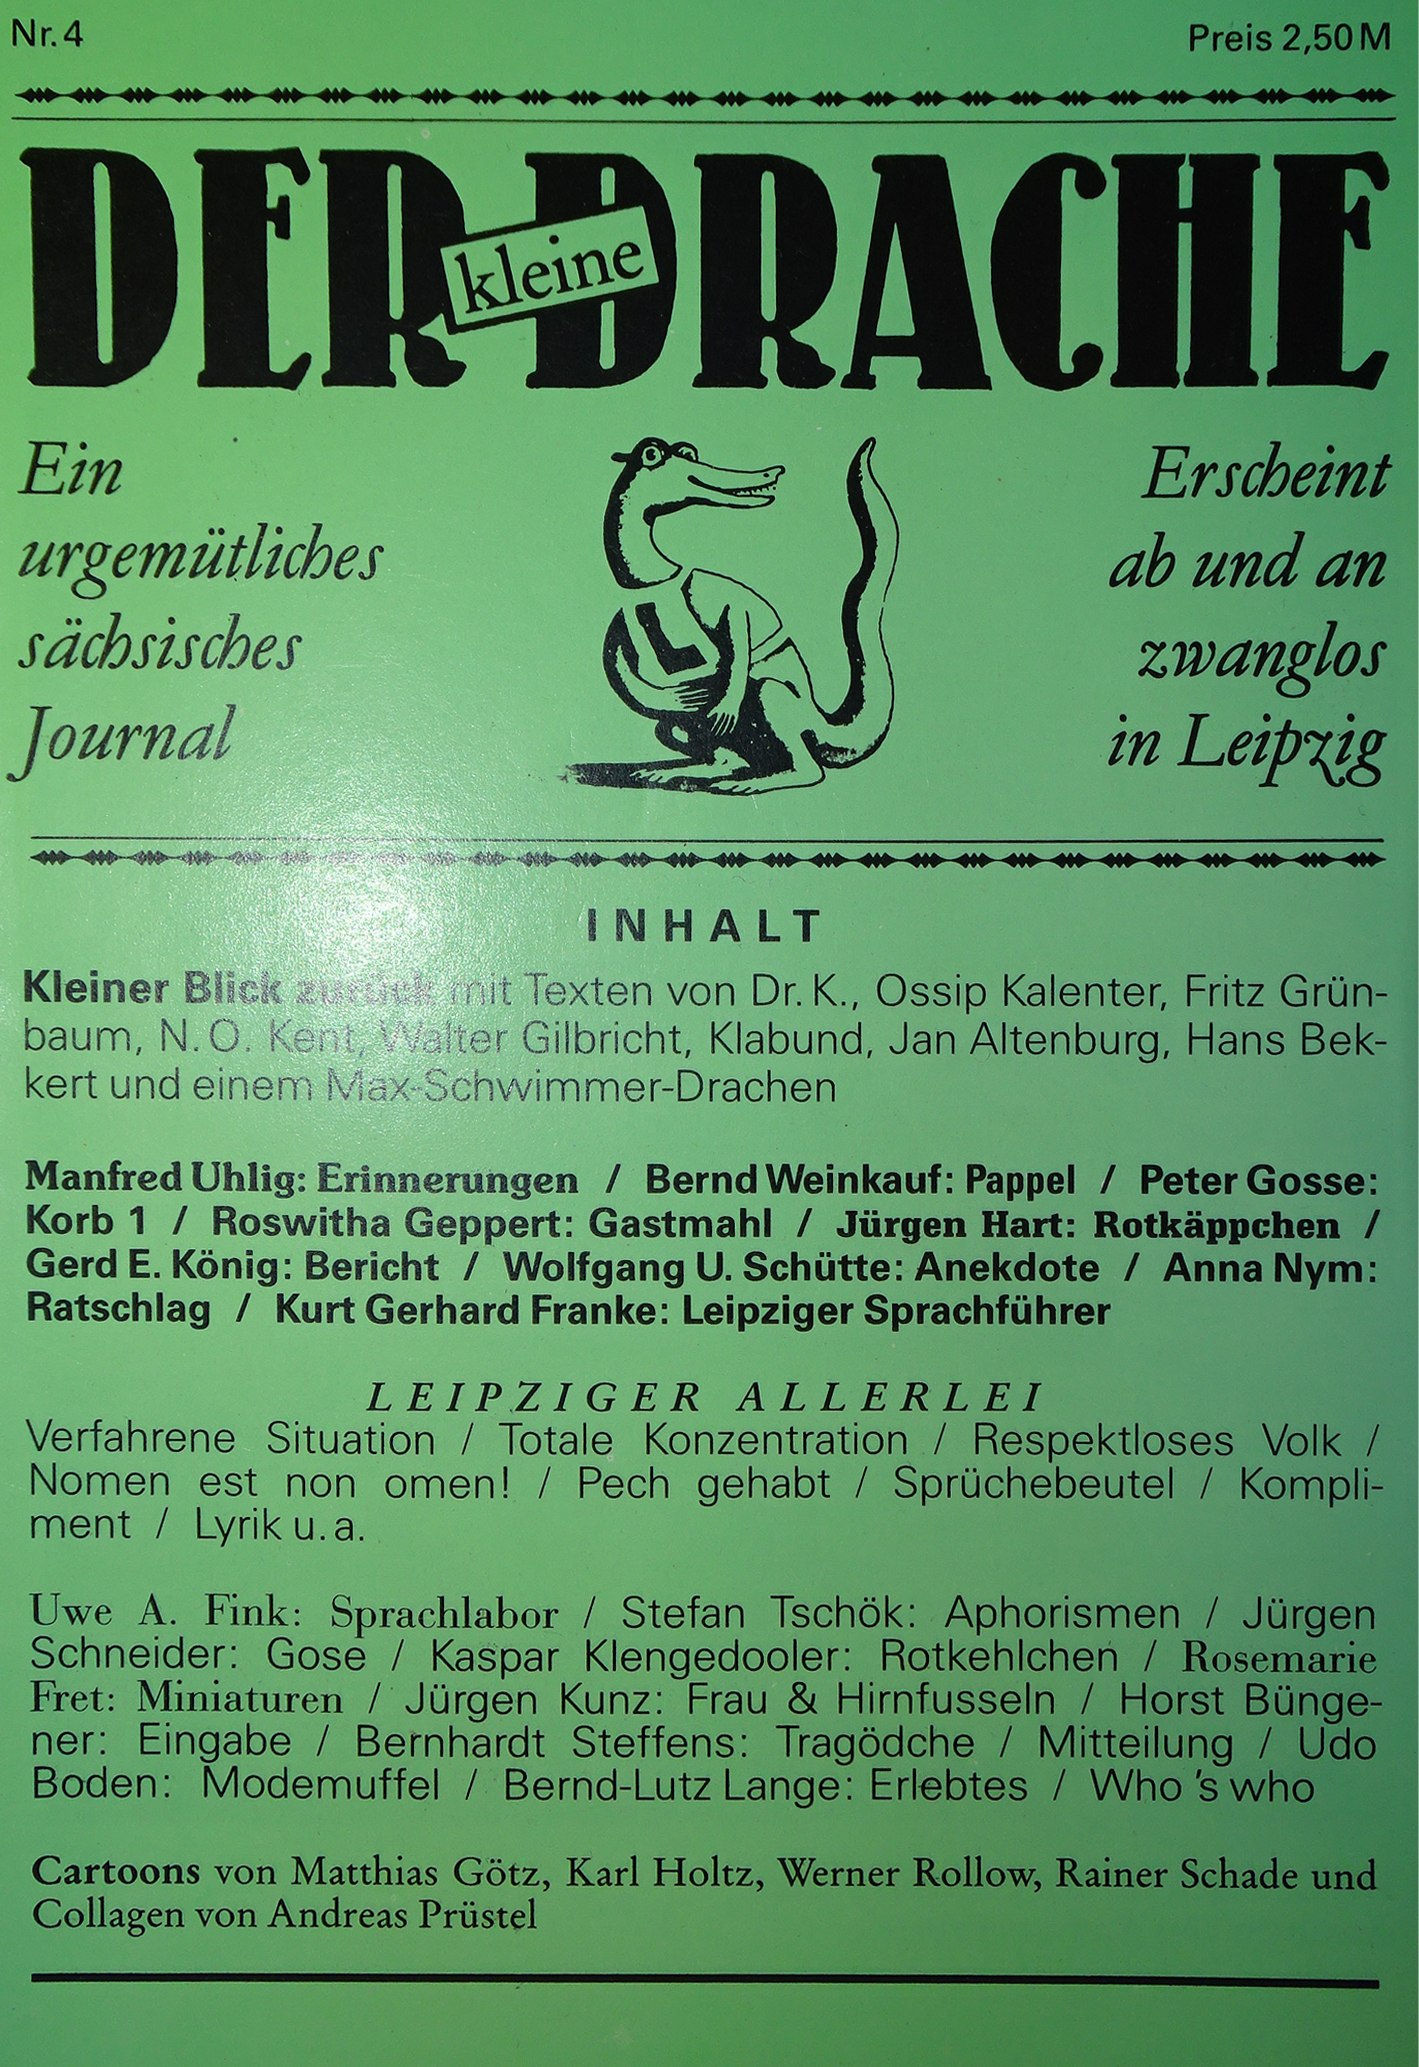 DDR | Bild Nr.2